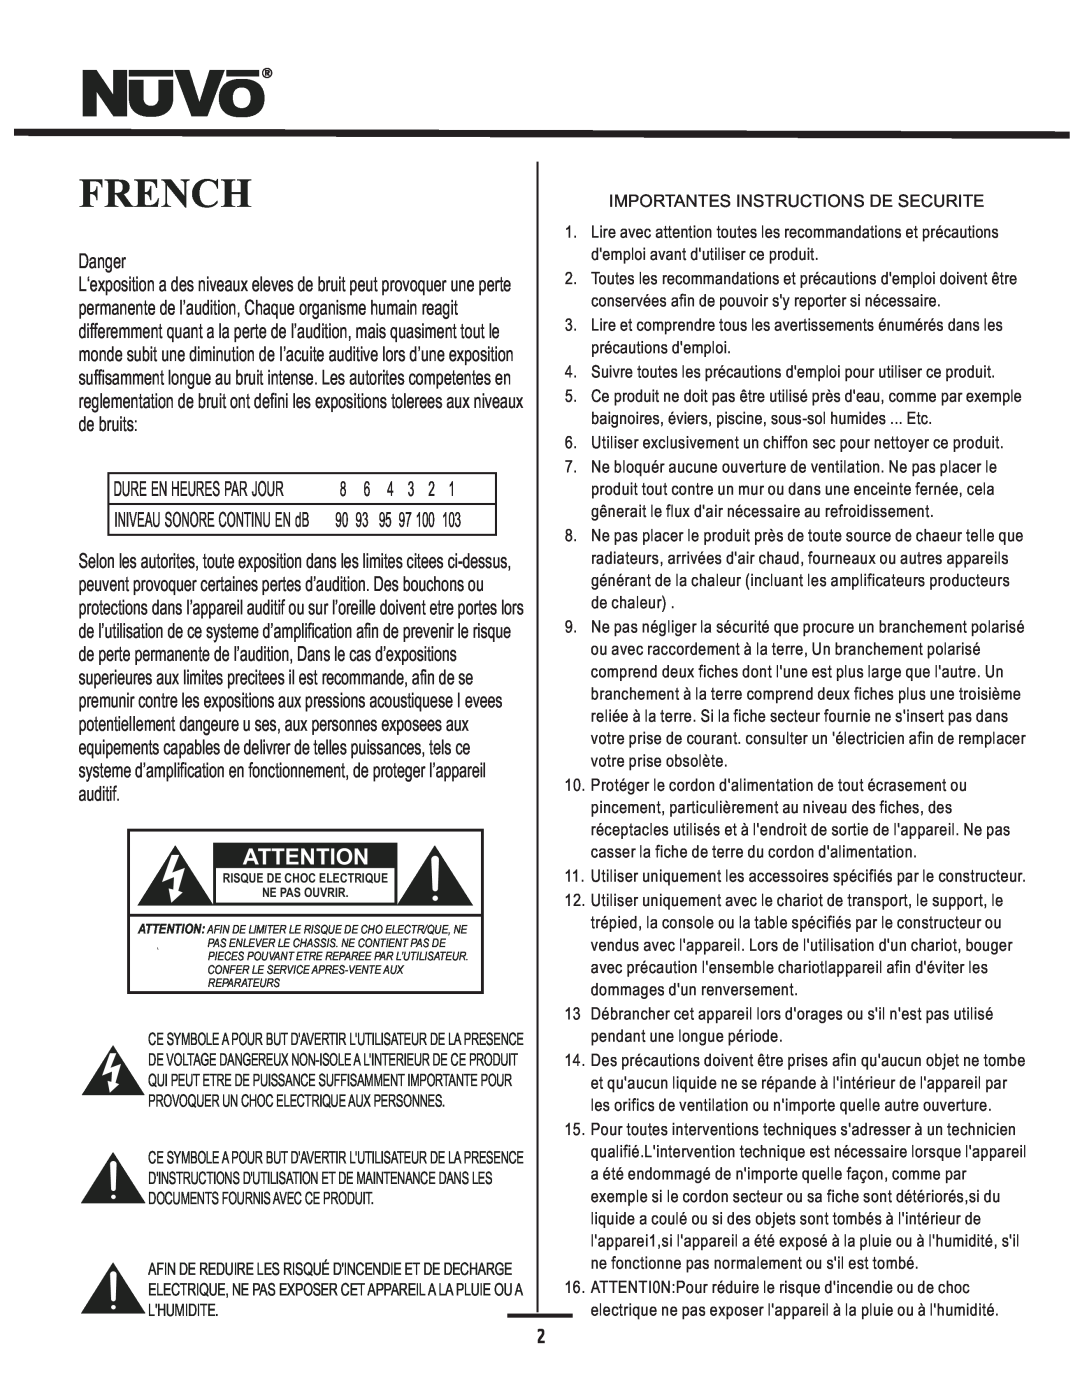 Nuvo NV-I8GMS, NV-I8GXS manual French, Danger 